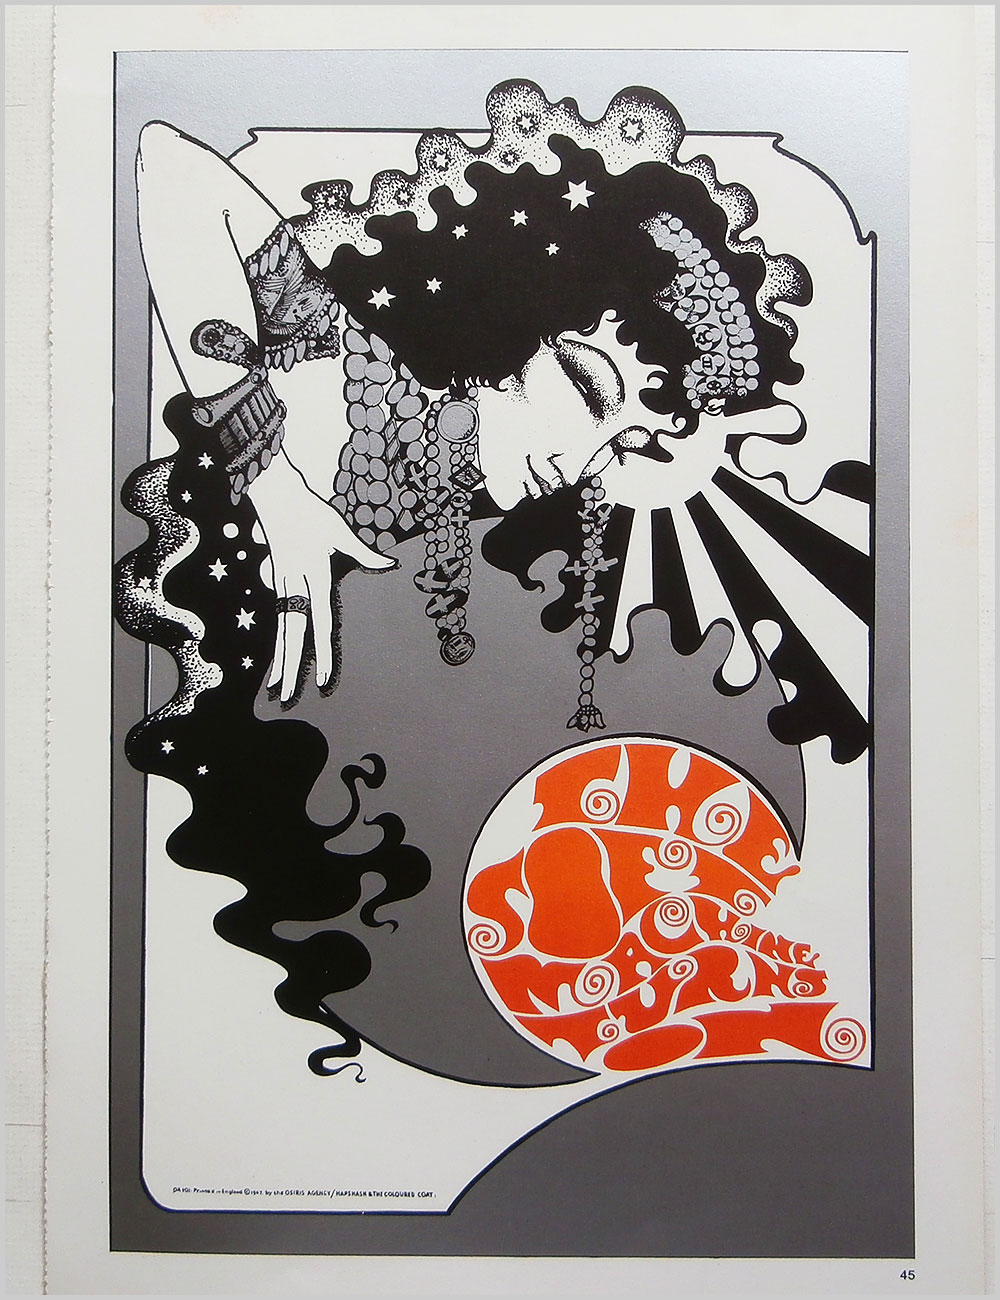 Crazy World of Arthur Brown and The Soft Machine - Rock Poster: Crazy World of Arthur Brown b/w The Soft Machine  (PB100275) 